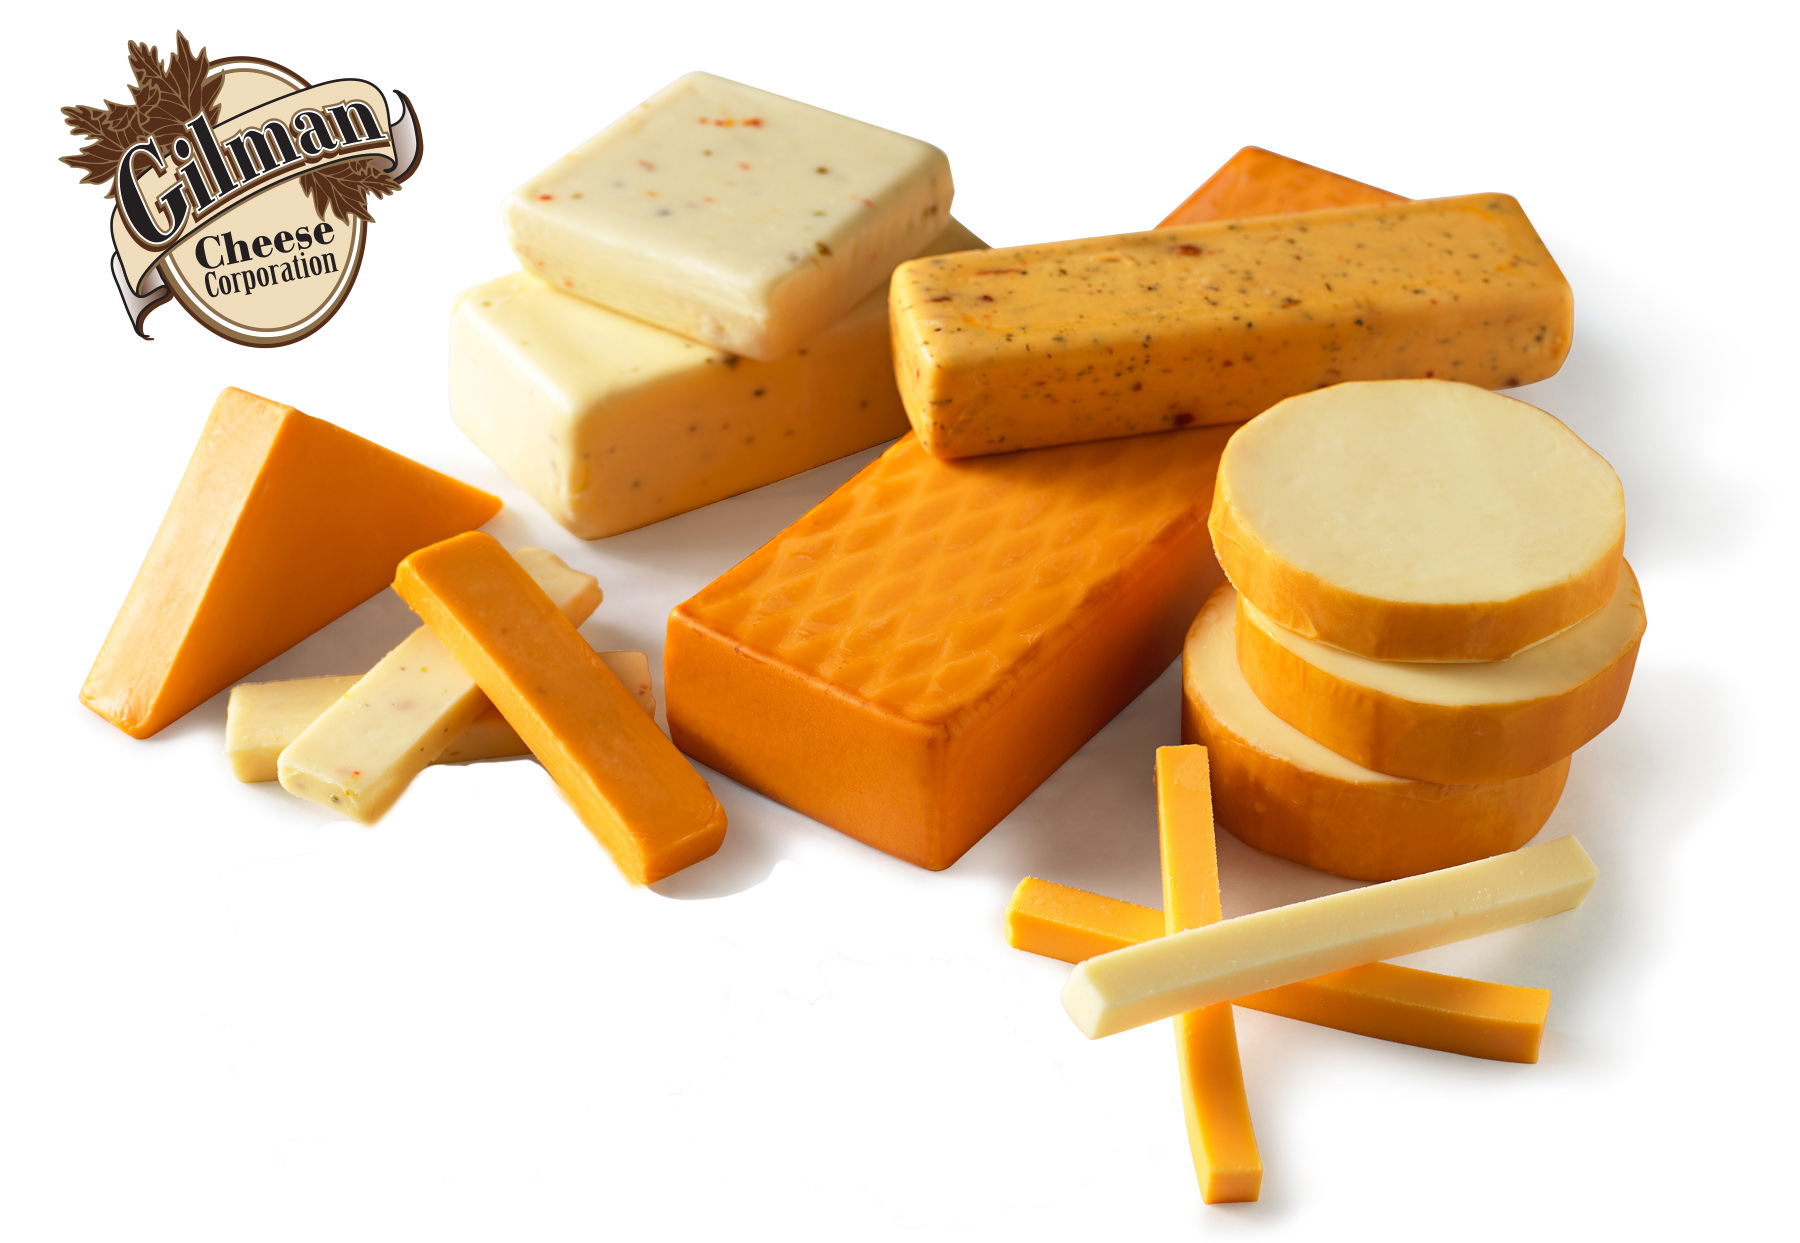 Gilman Cheese's Award winning Processed Cheese